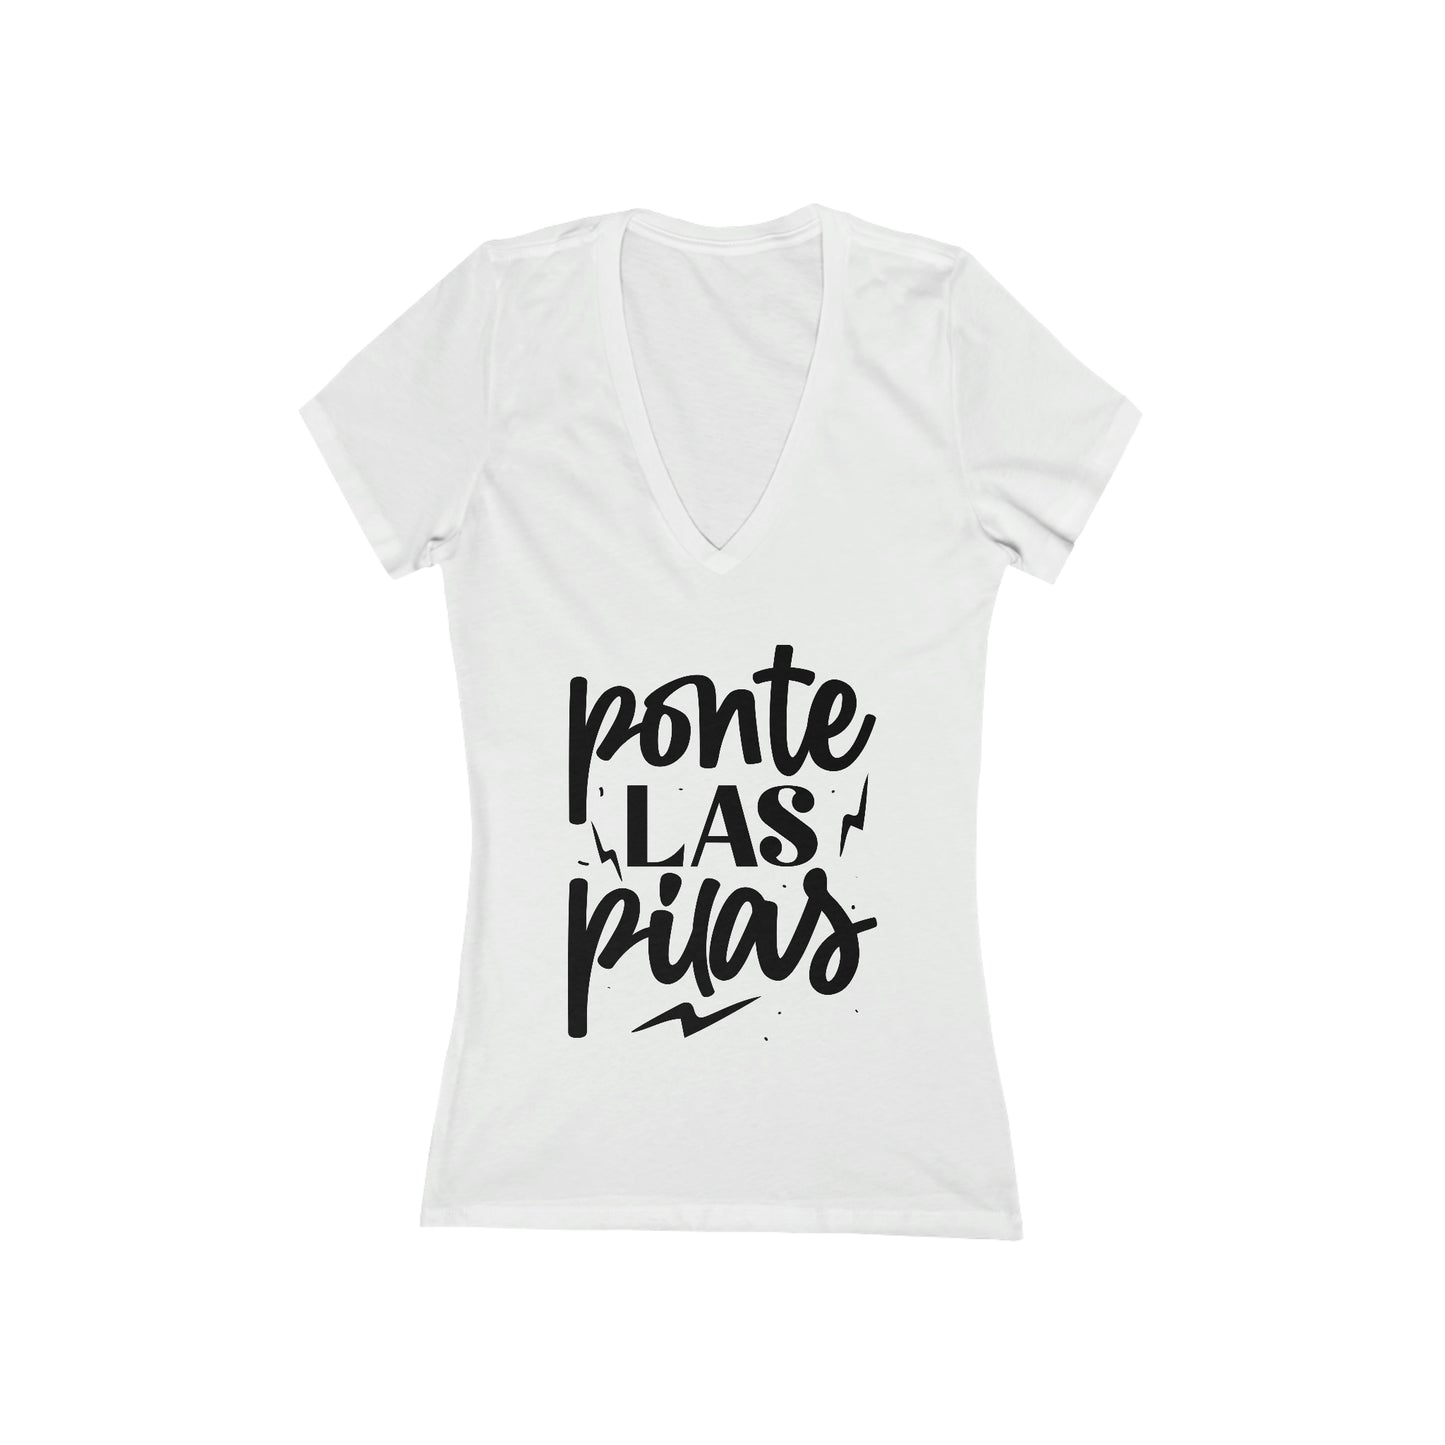 Ponte Las Pilas (Get to Work) Women's Jersey Short Sleeve Deep V-Neck Tee